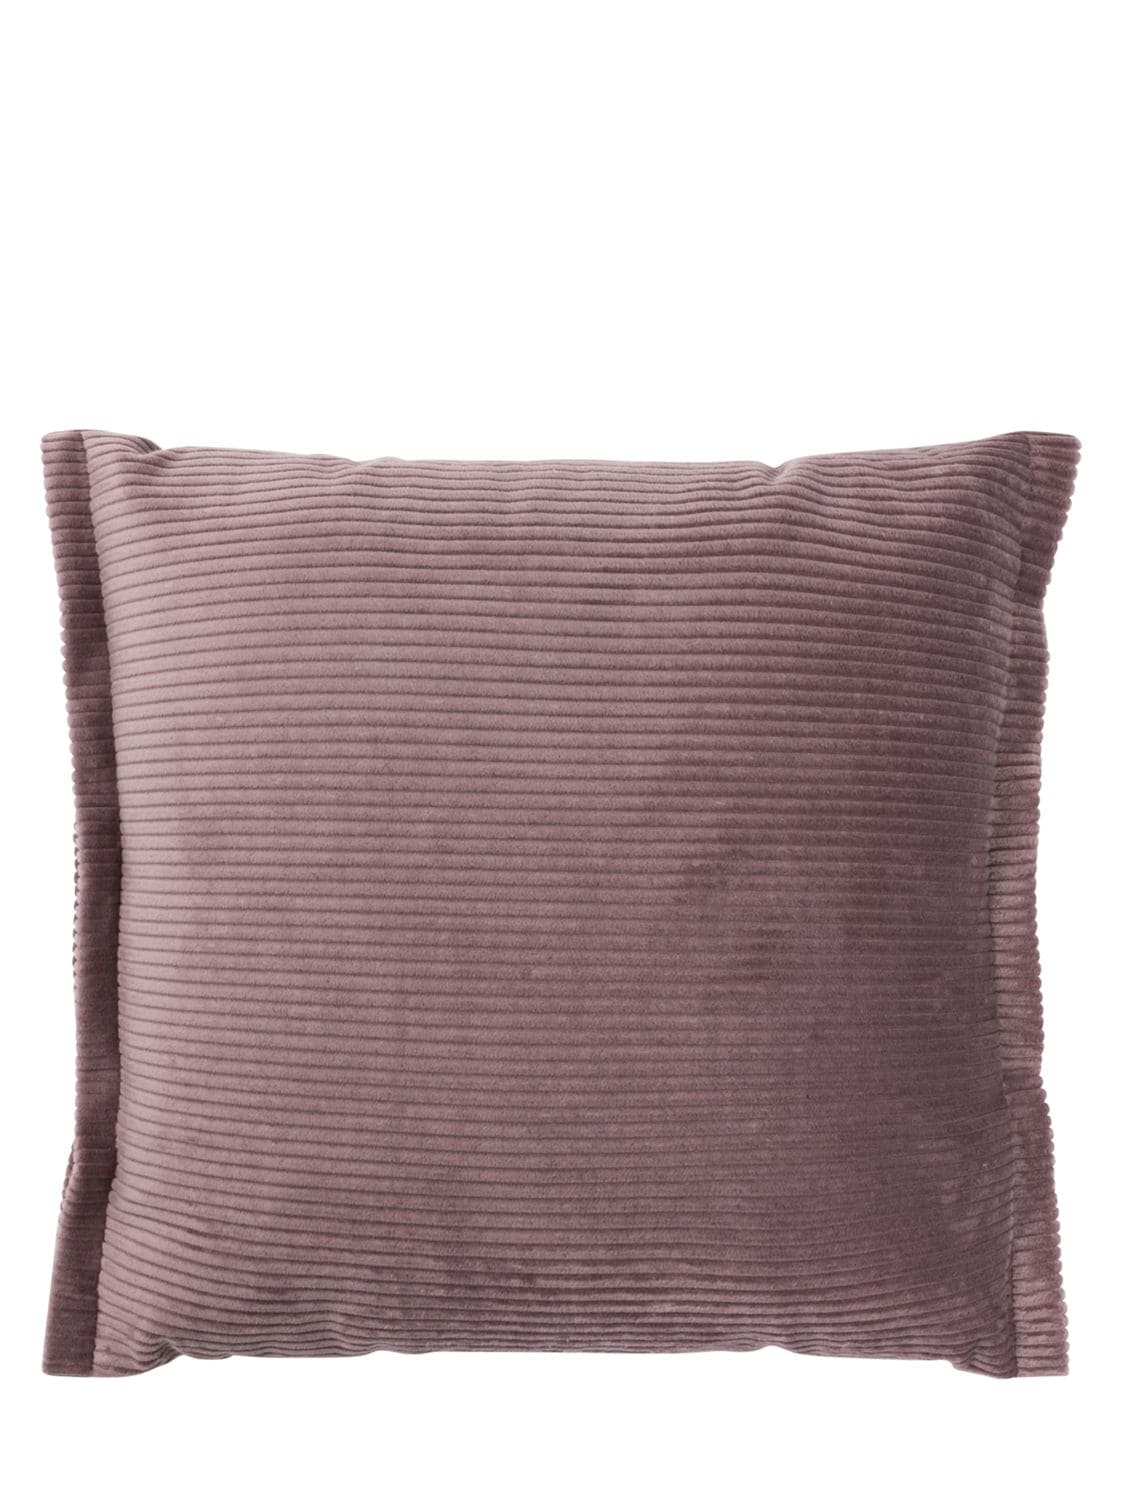 Image of Dueville Cotton Cushion